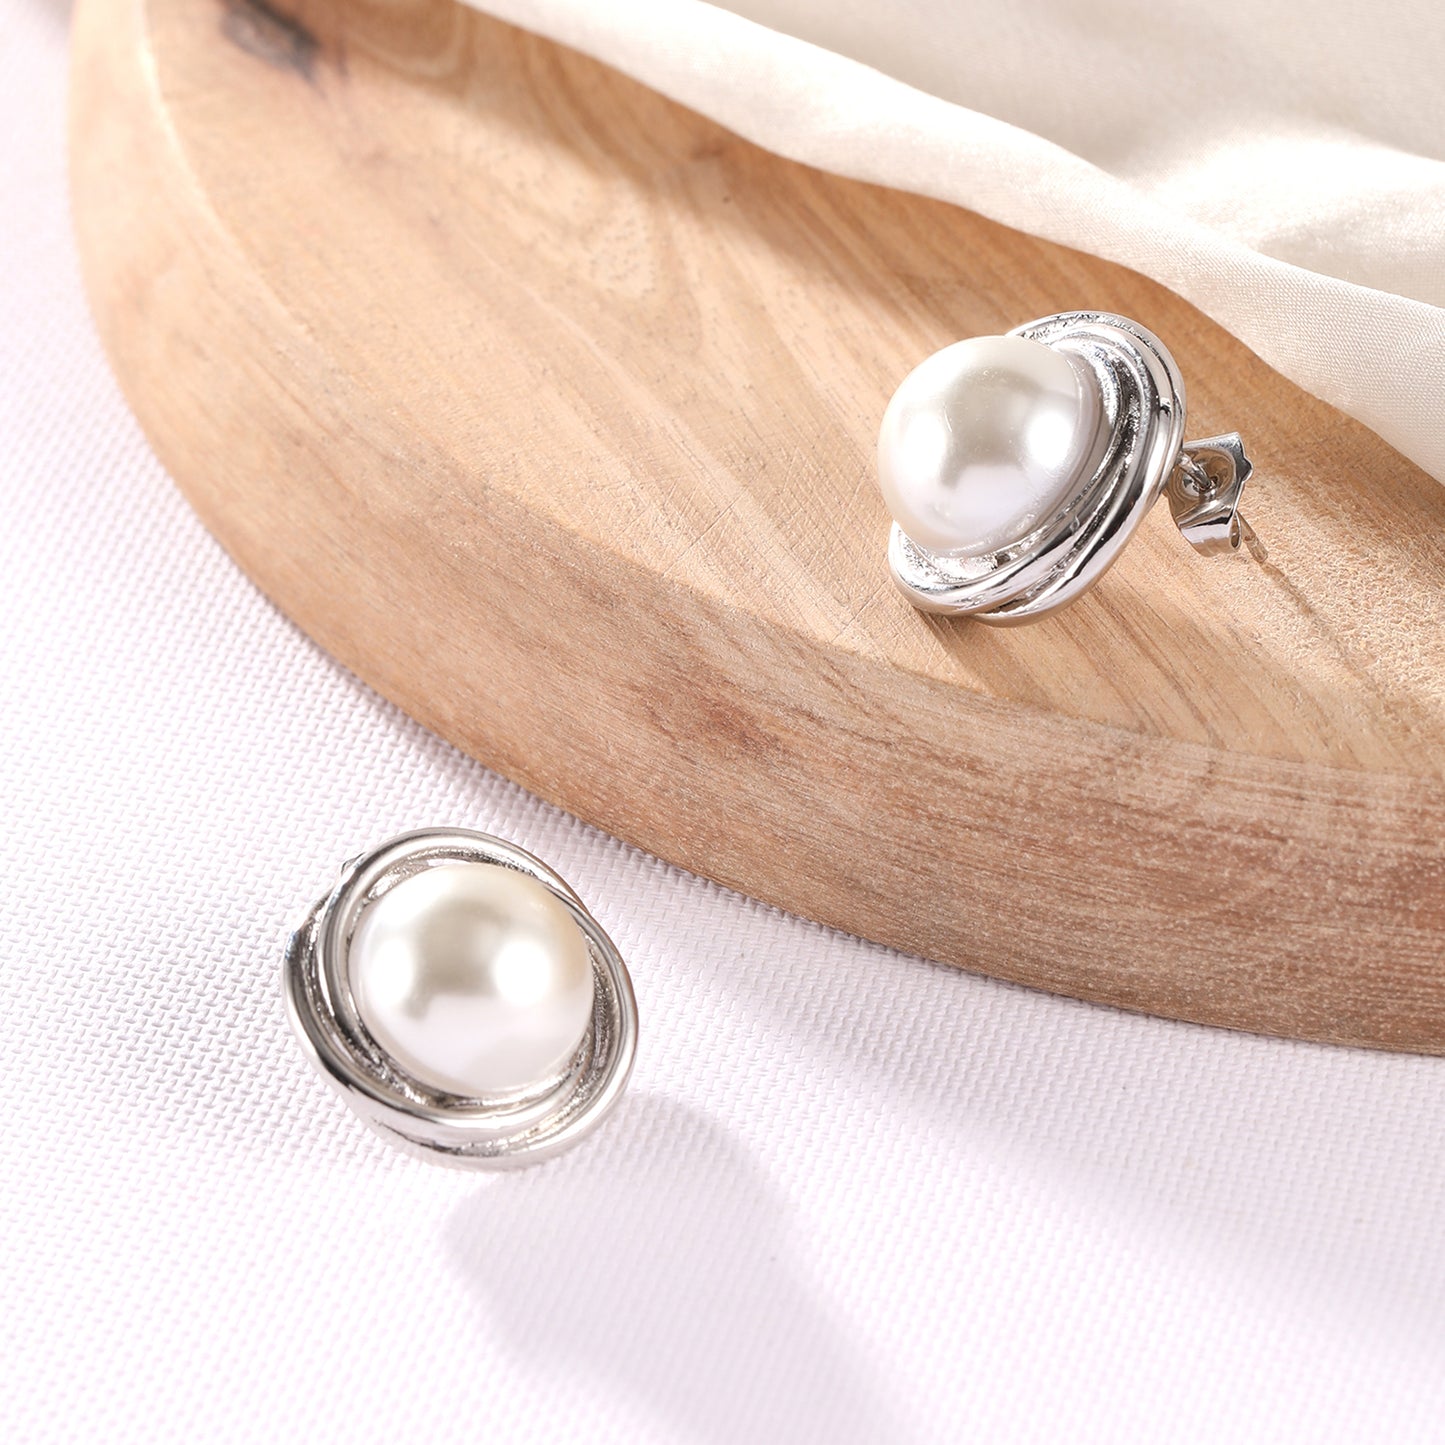 Gold/Silver Swirl with Pearl Earrings